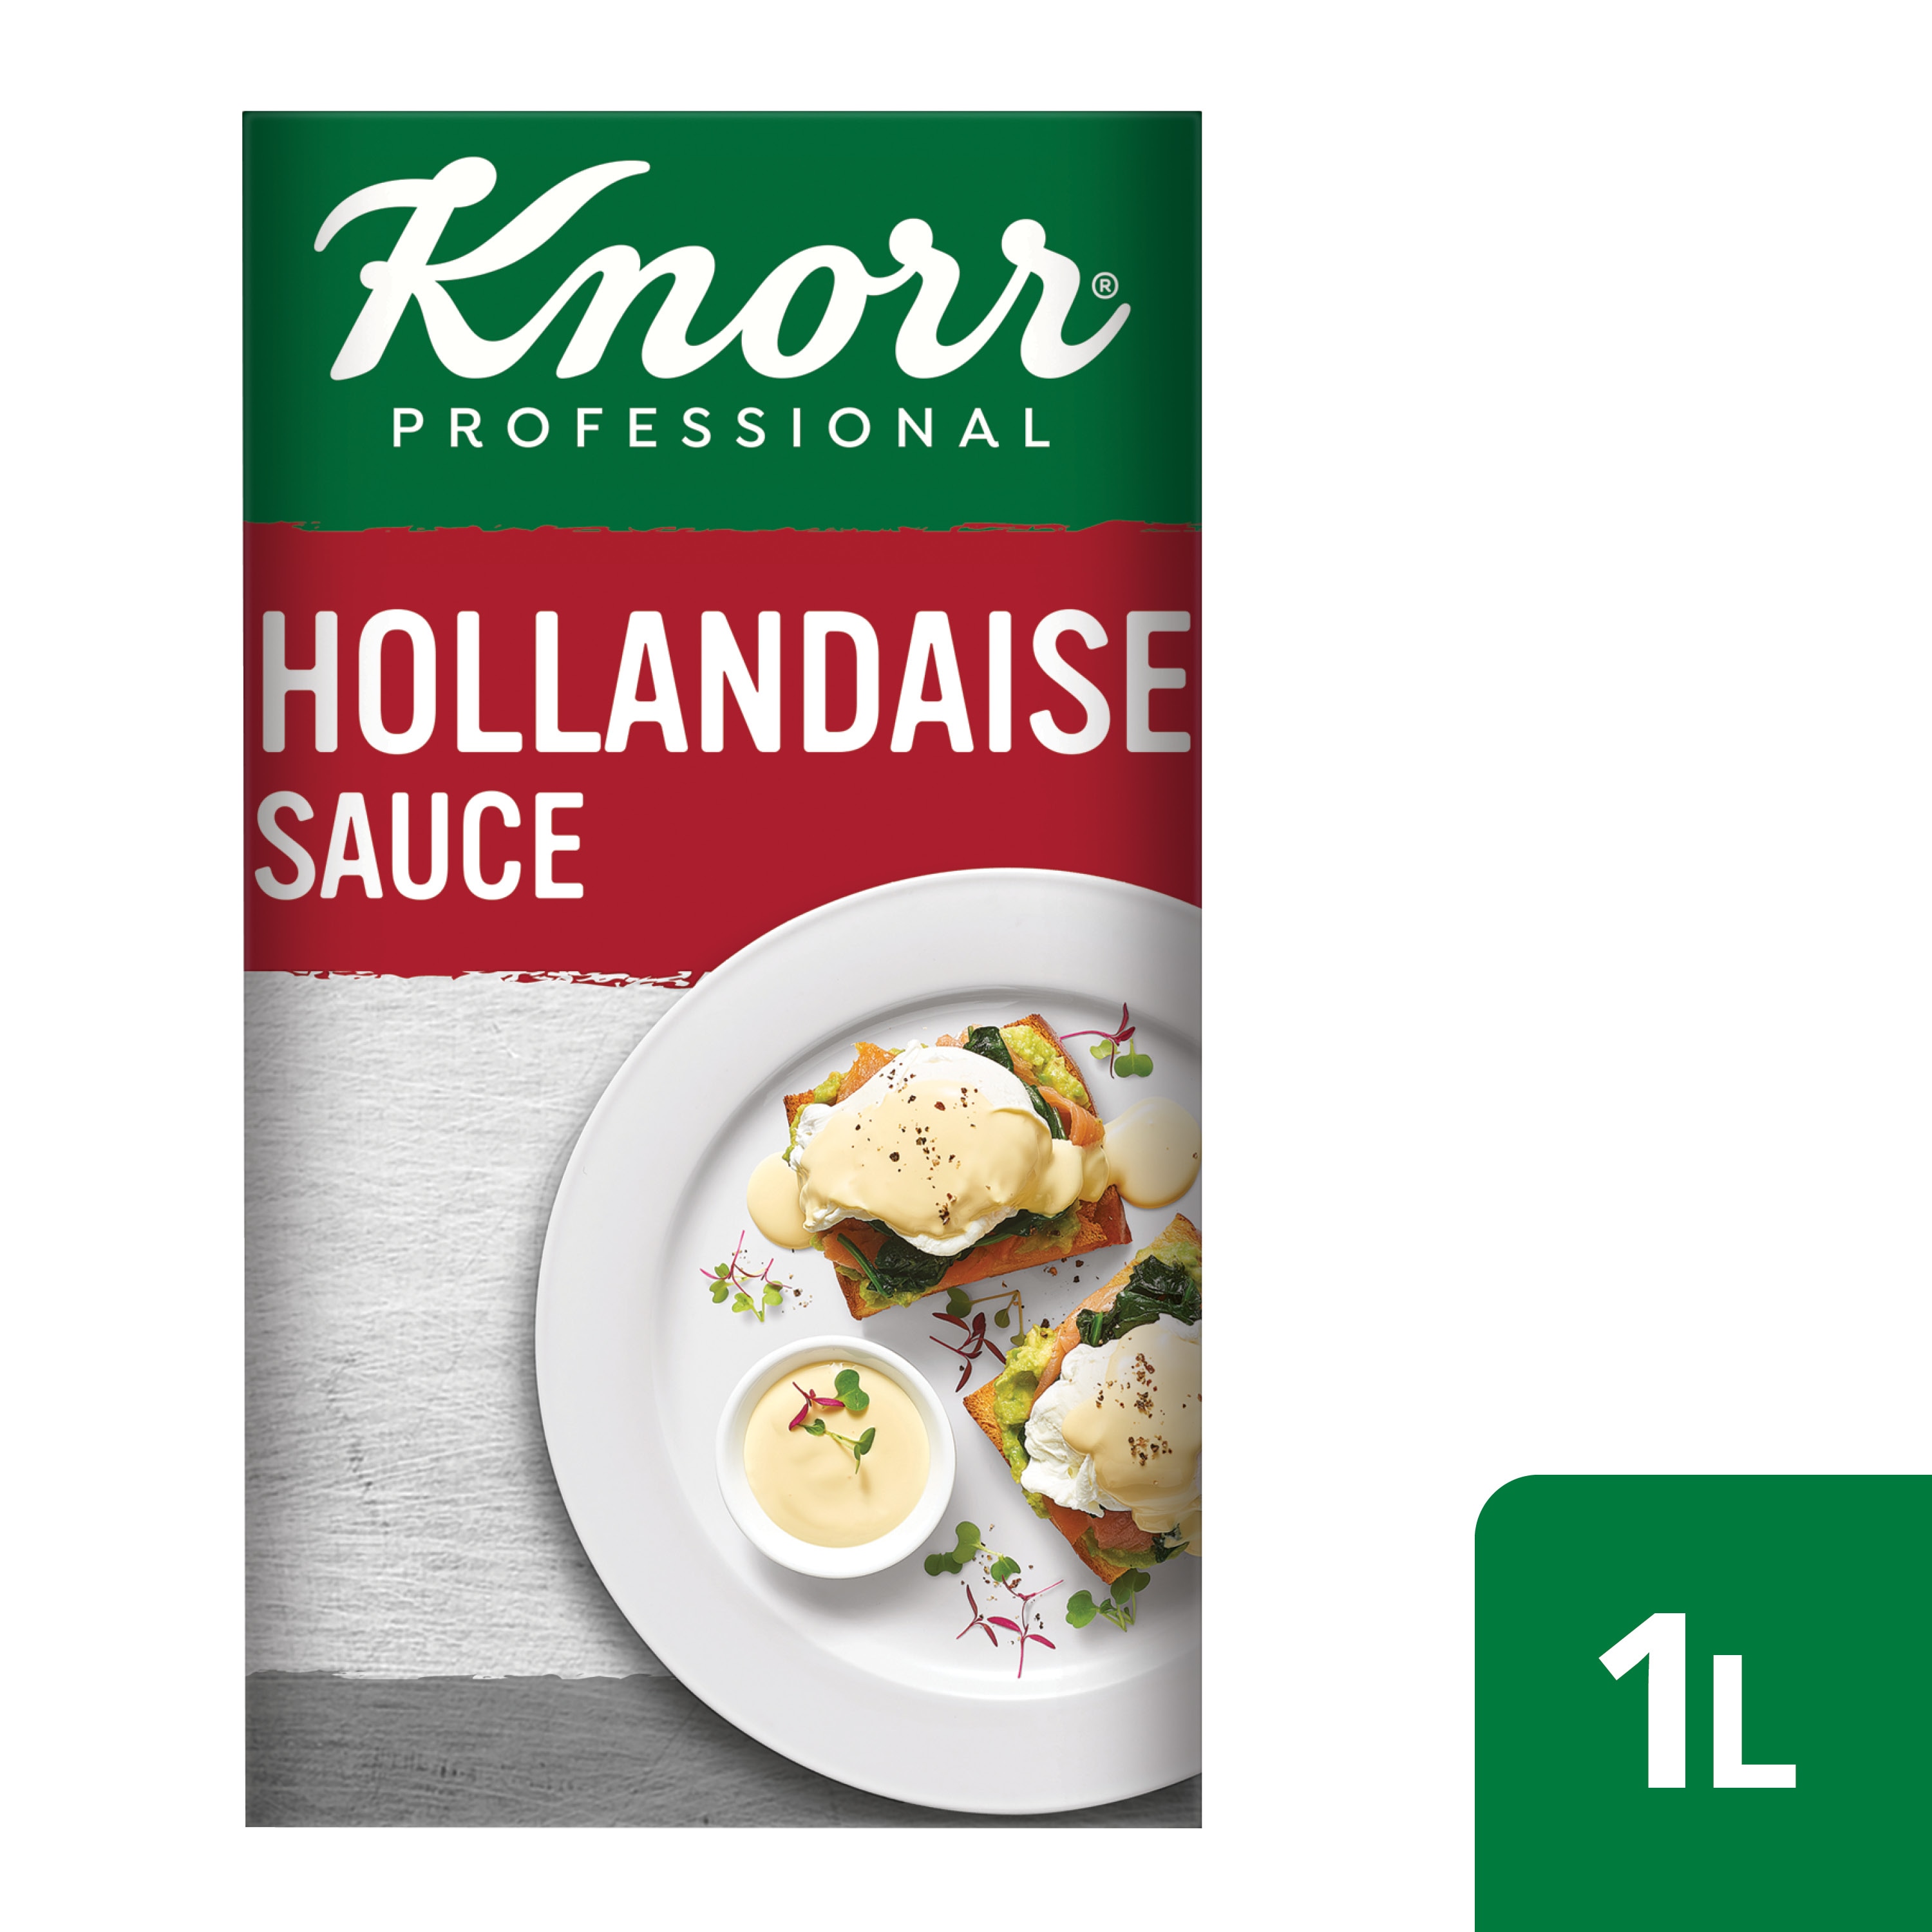 Knorr Professional Hollandaise Sauce